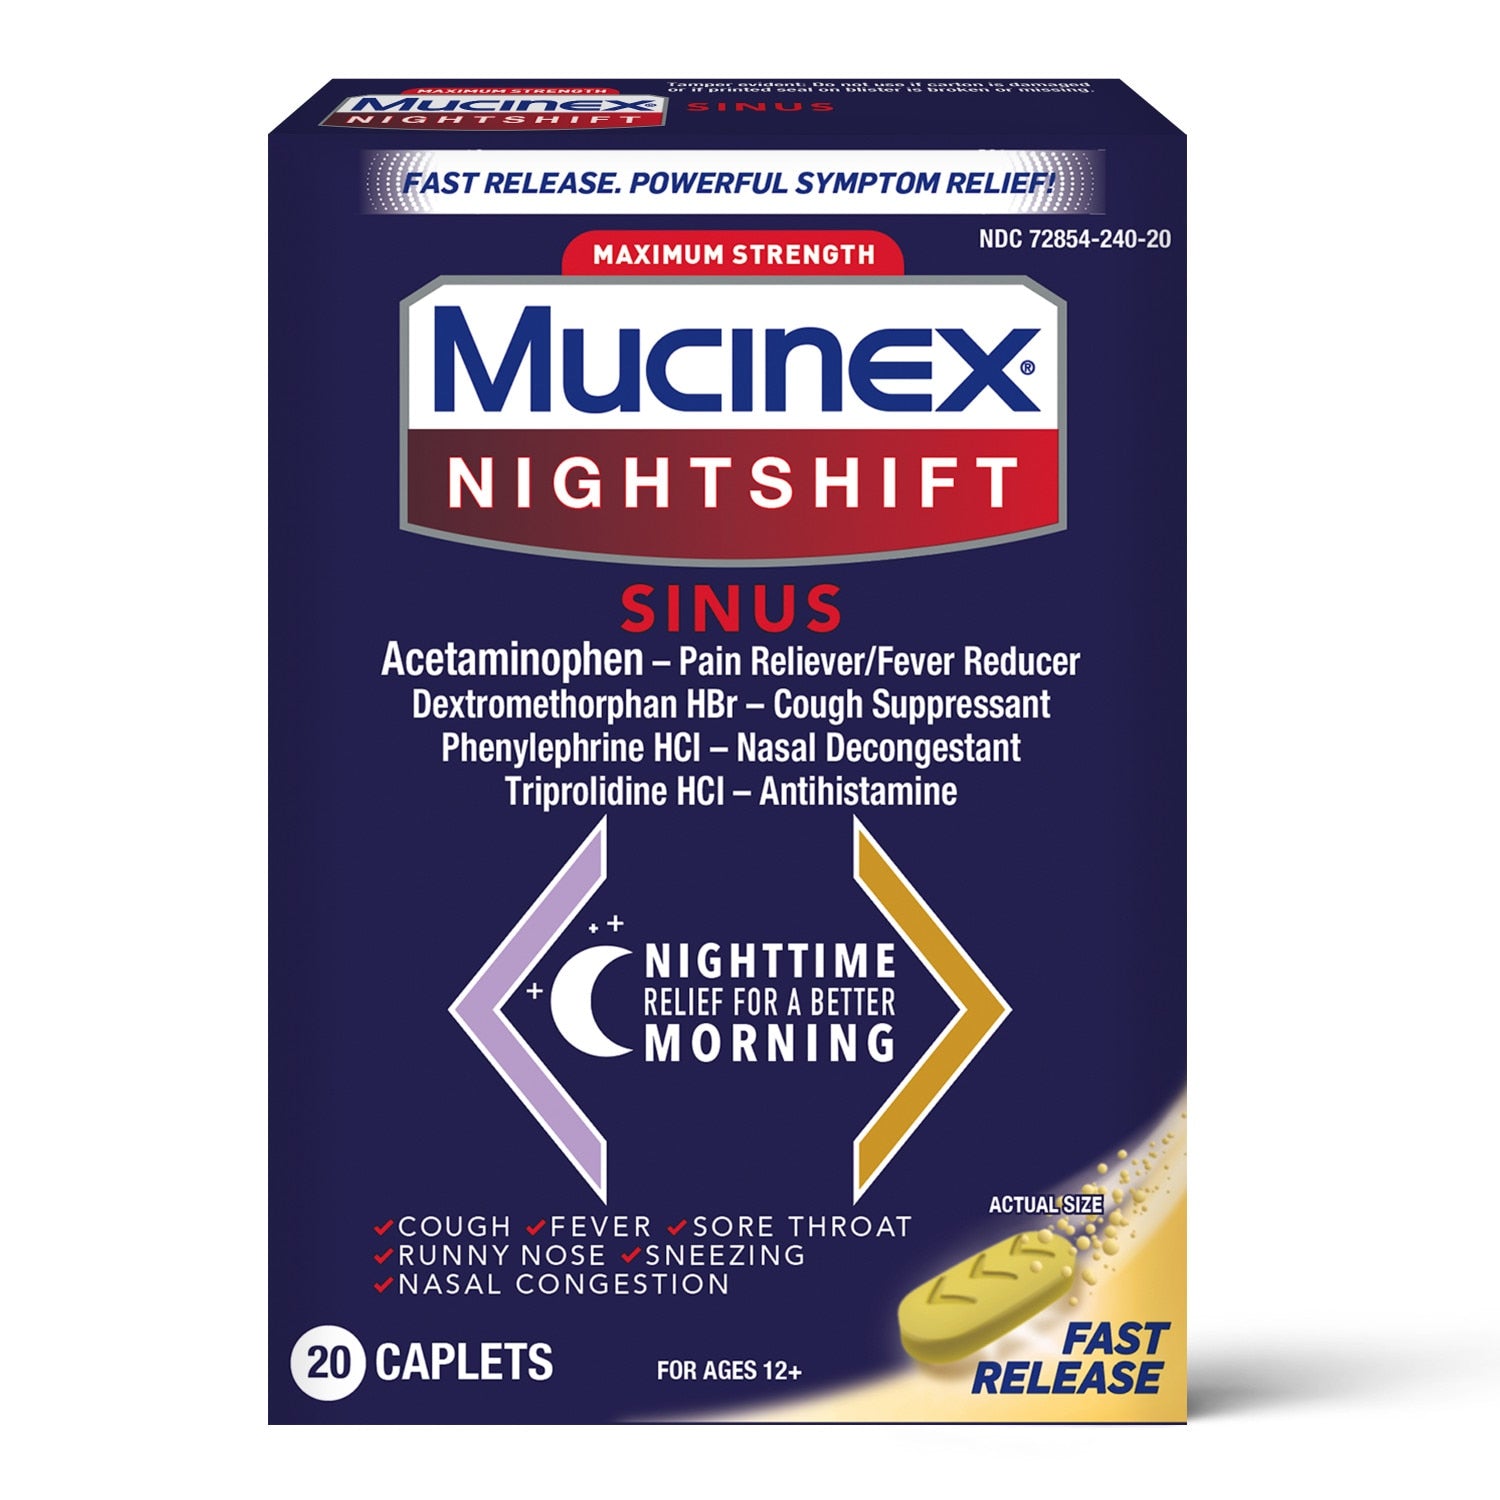 Mucinex Night Shift Sinus, 20 Caplets